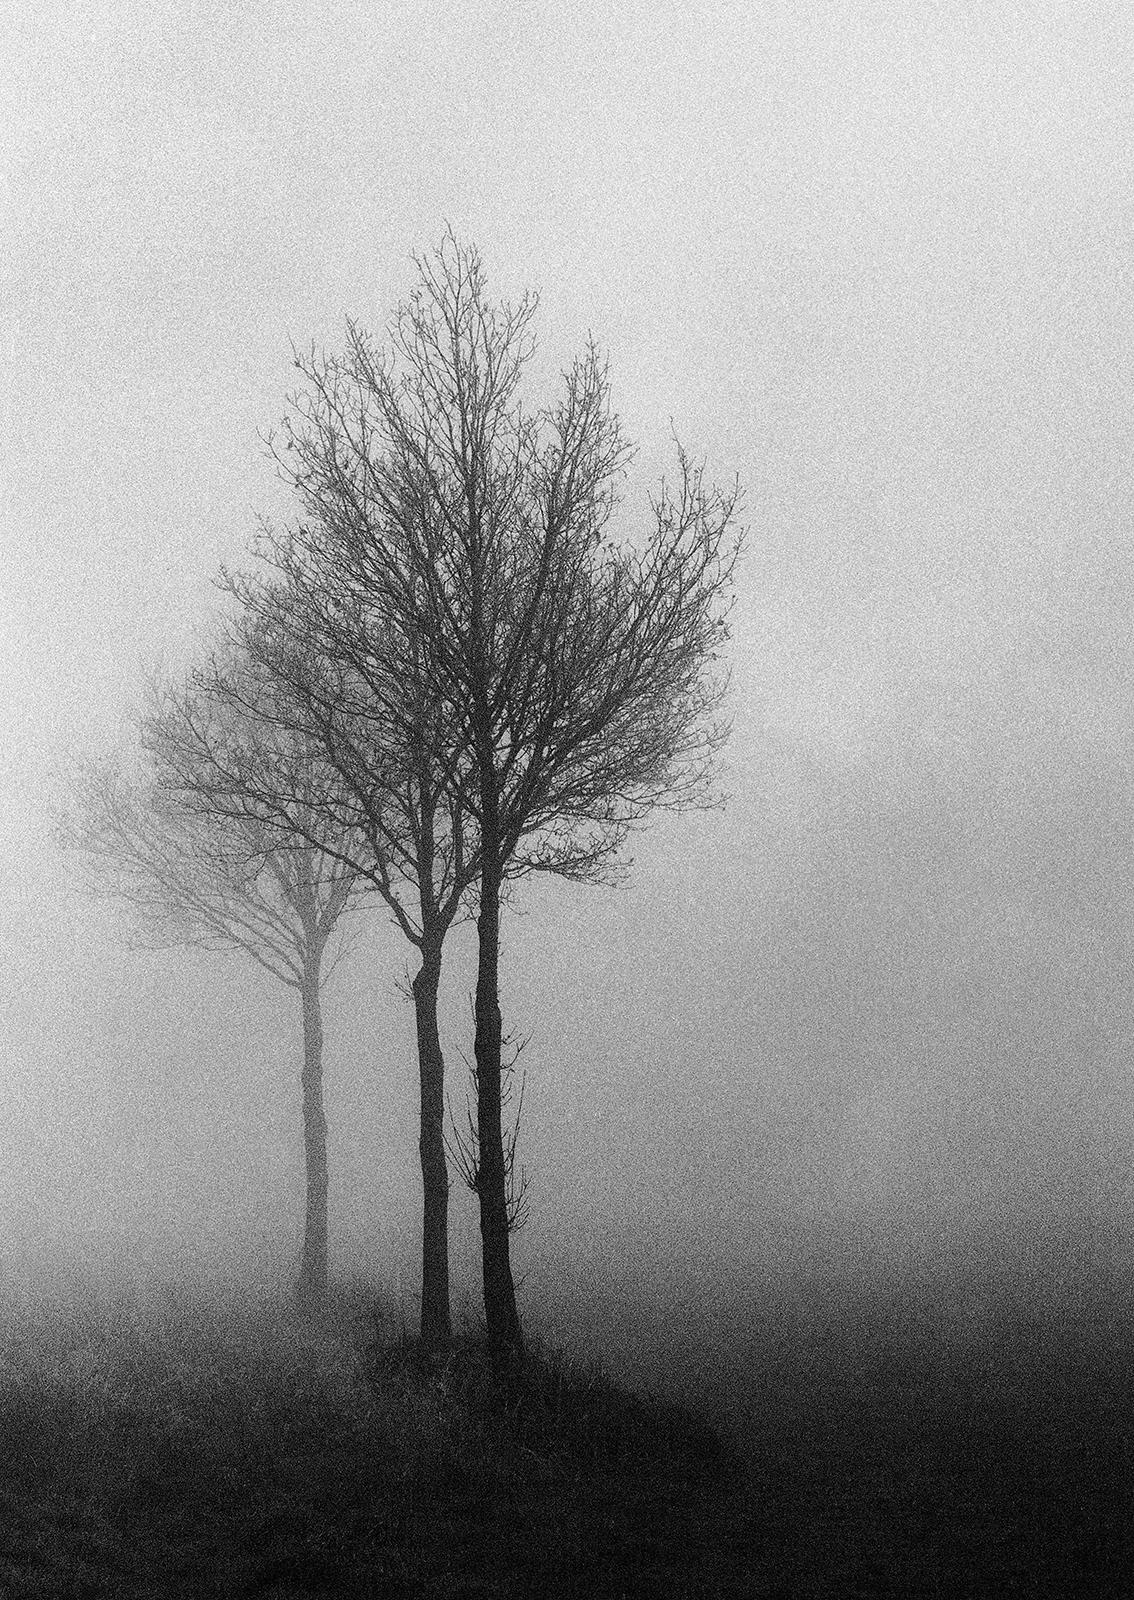 Ian Sanderson Landscape Photograph - 3 Trees -Signed limited edition nature print, Black white photo, Misty landscape